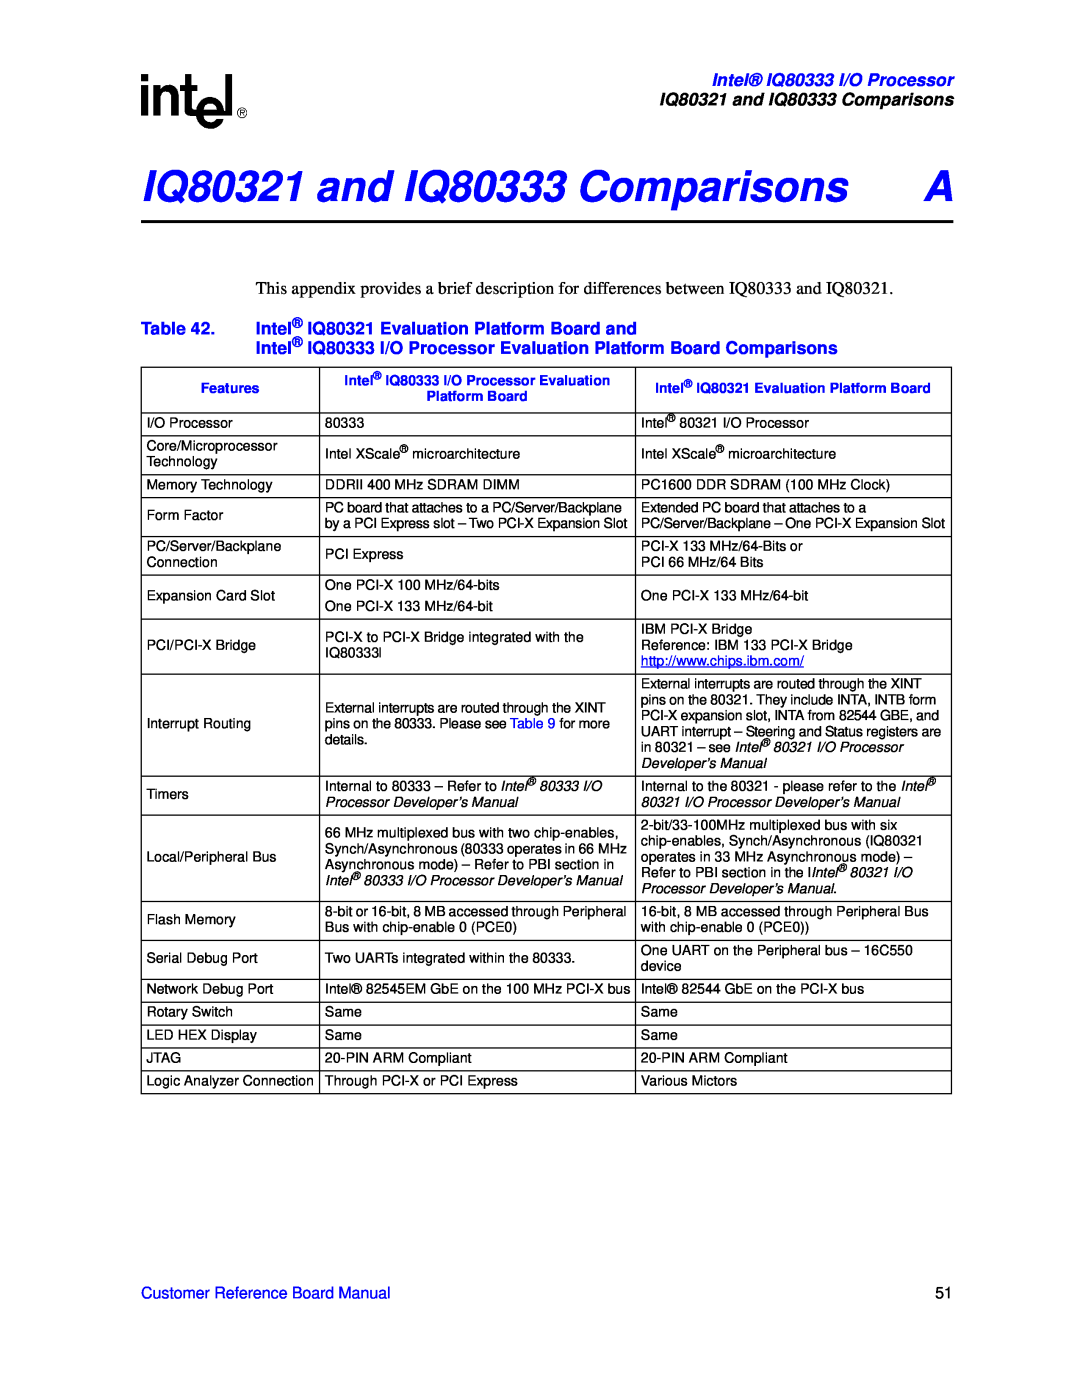 Intel manual IQ80321 and IQ80333 Comparisons, Intel IQ80321 Evaluation Platform Board and, Intel IQ80333 I/O Processor 